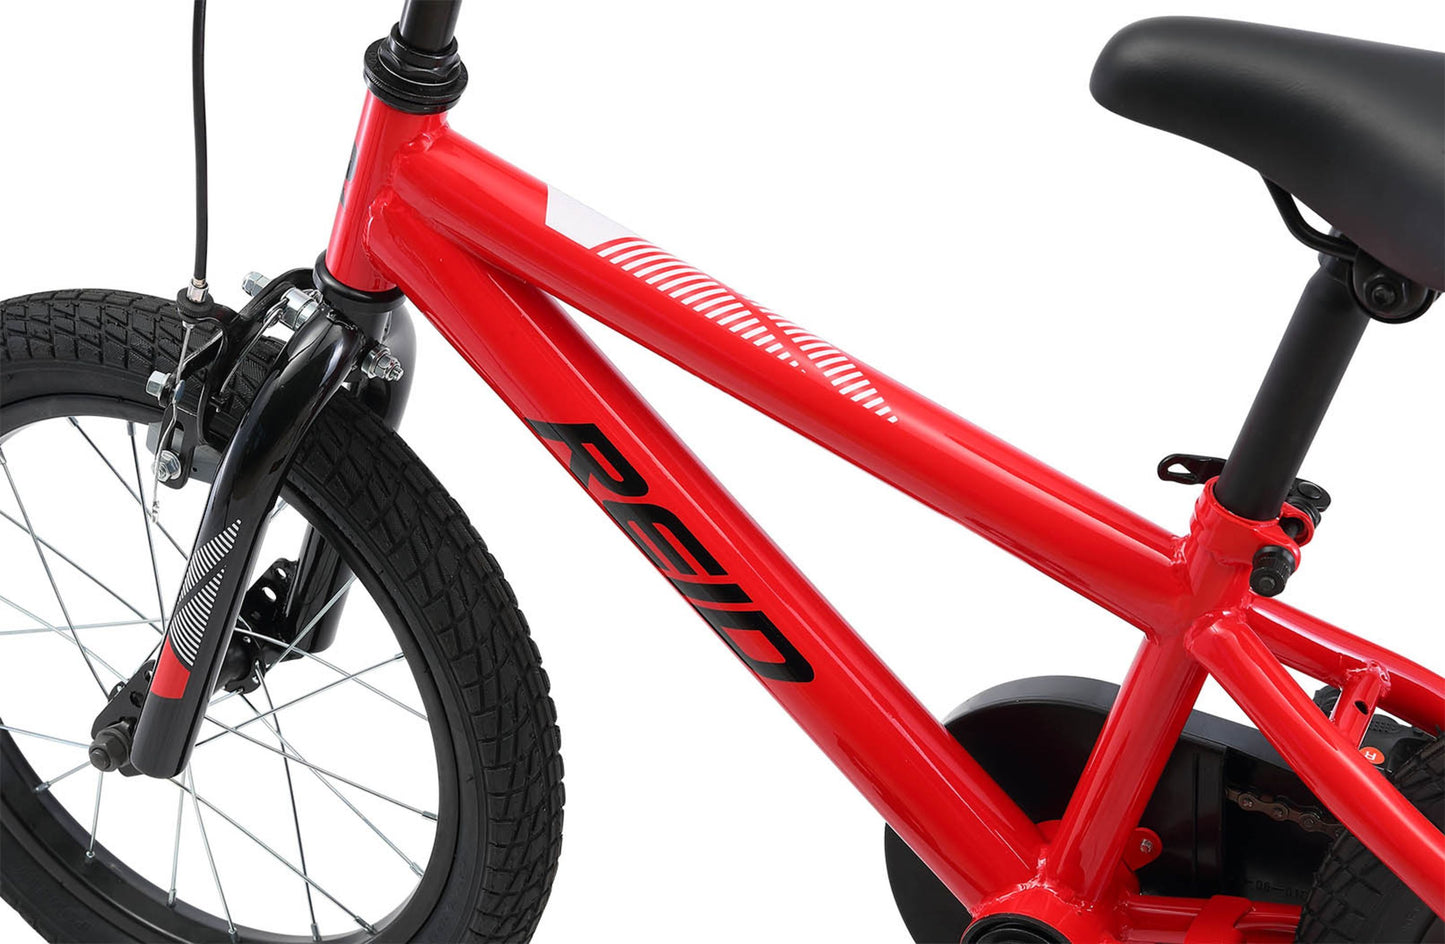 Explorer S 16" Kids Bike in red showing Reid logo on bike frame from Reid Cycles Australia 